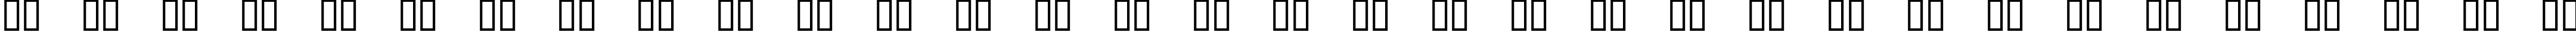 Пример написания русского алфавита шрифтом Curious Device